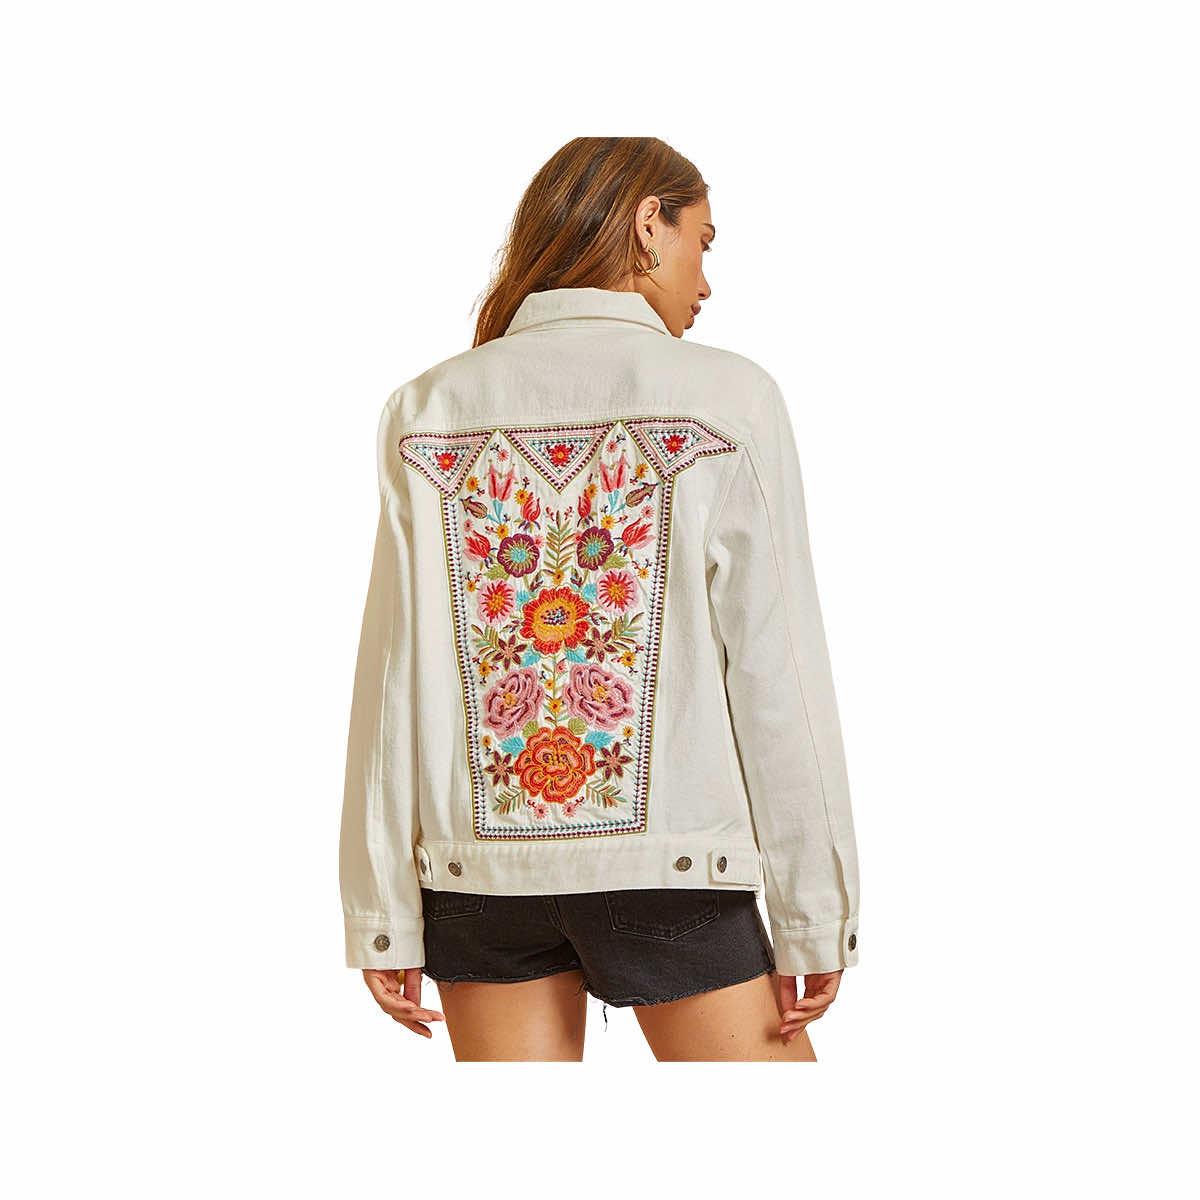  Women's Light Wash Embroidered Denim Jacket